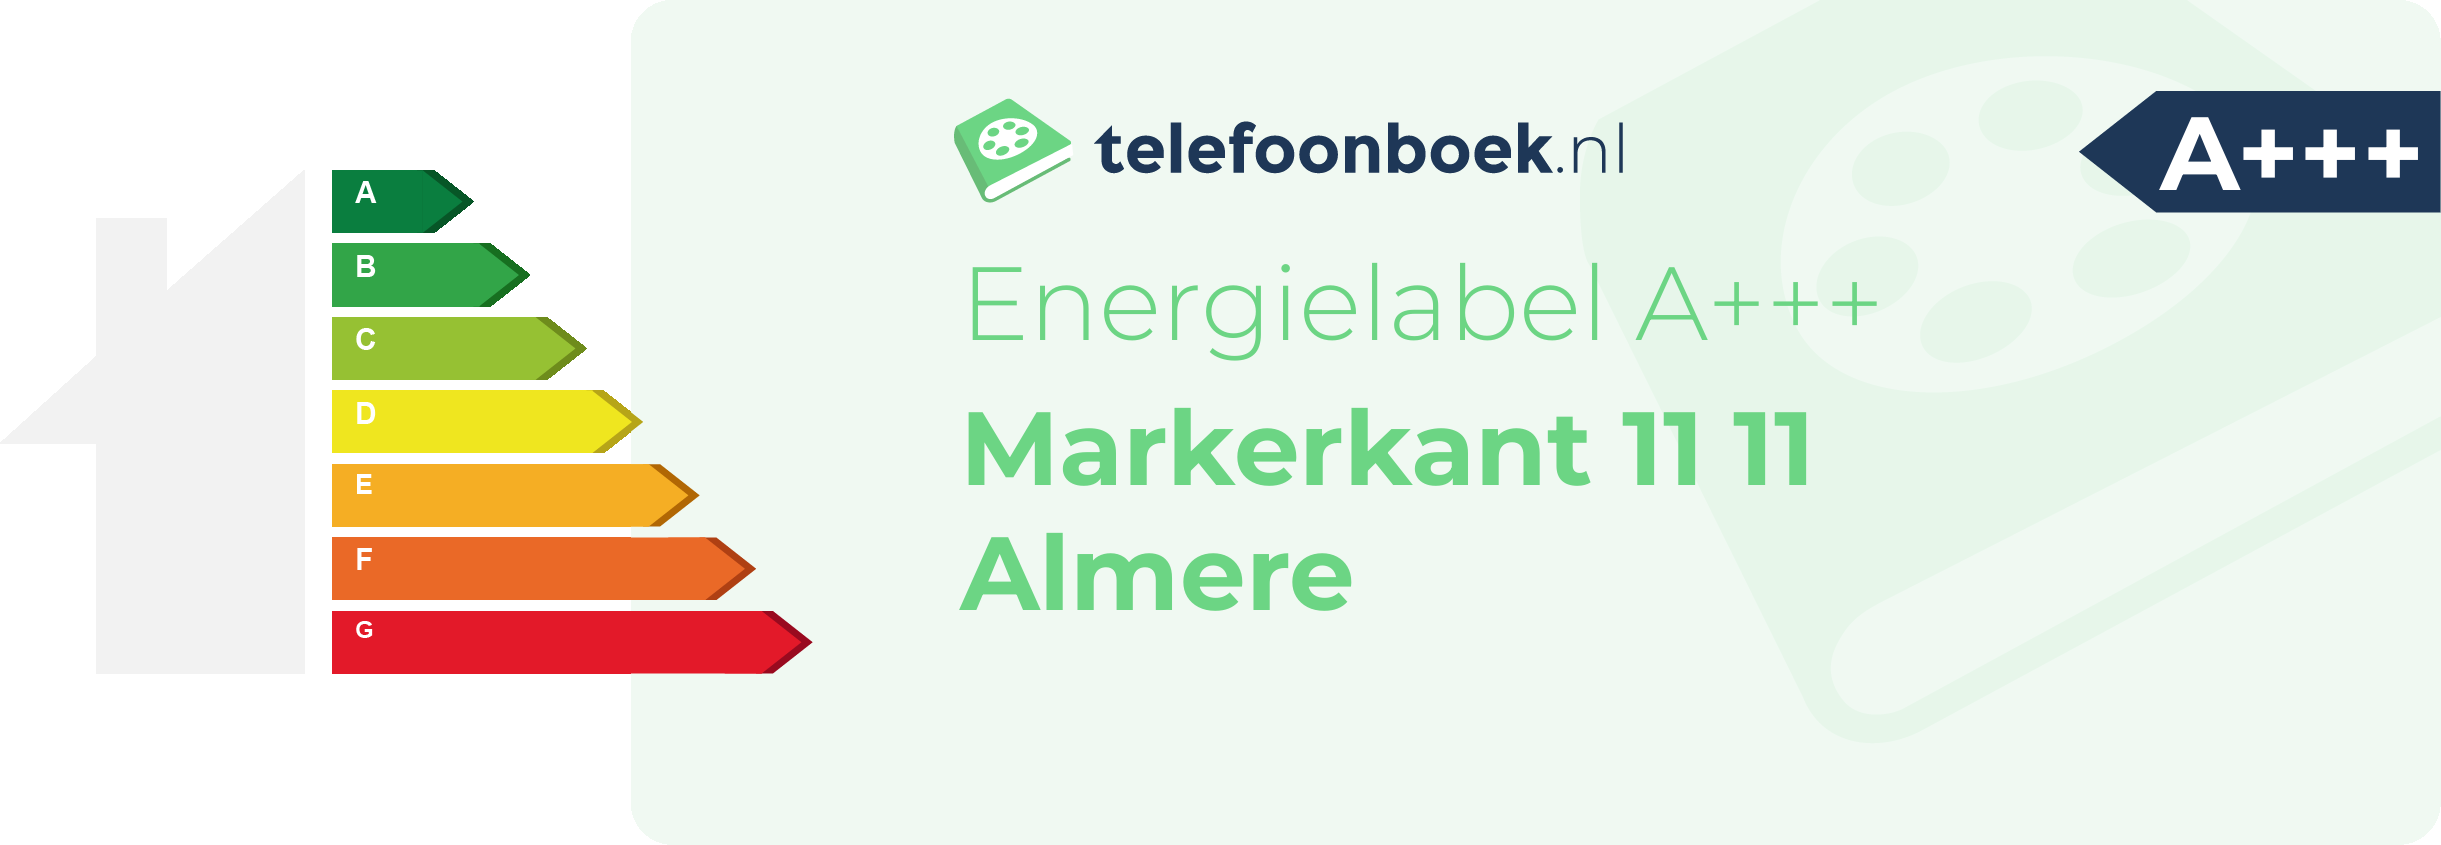 Energielabel Markerkant 11 11 Almere